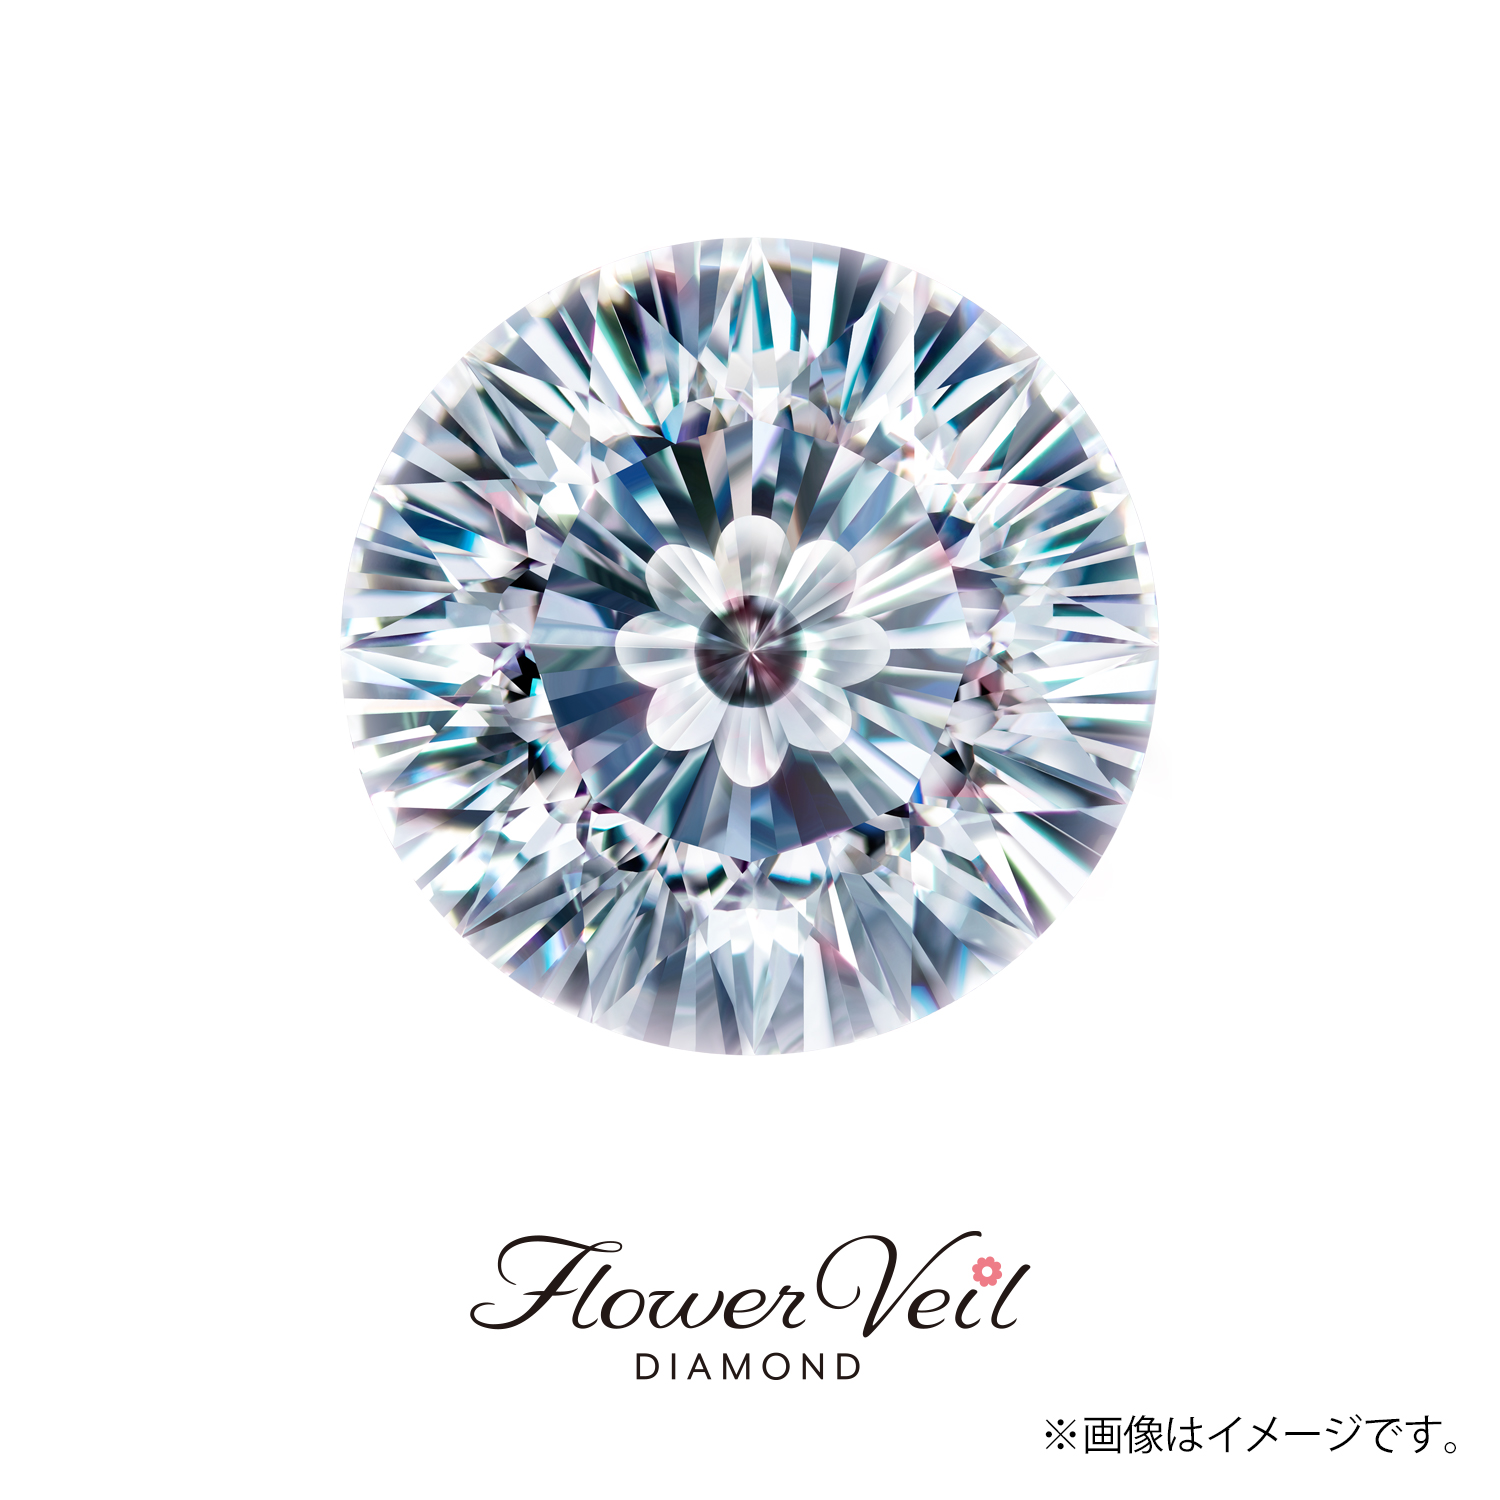 0.210ct Round ダイヤモンド / Ⅾ / VS2 / FLOWER VEIL CUT